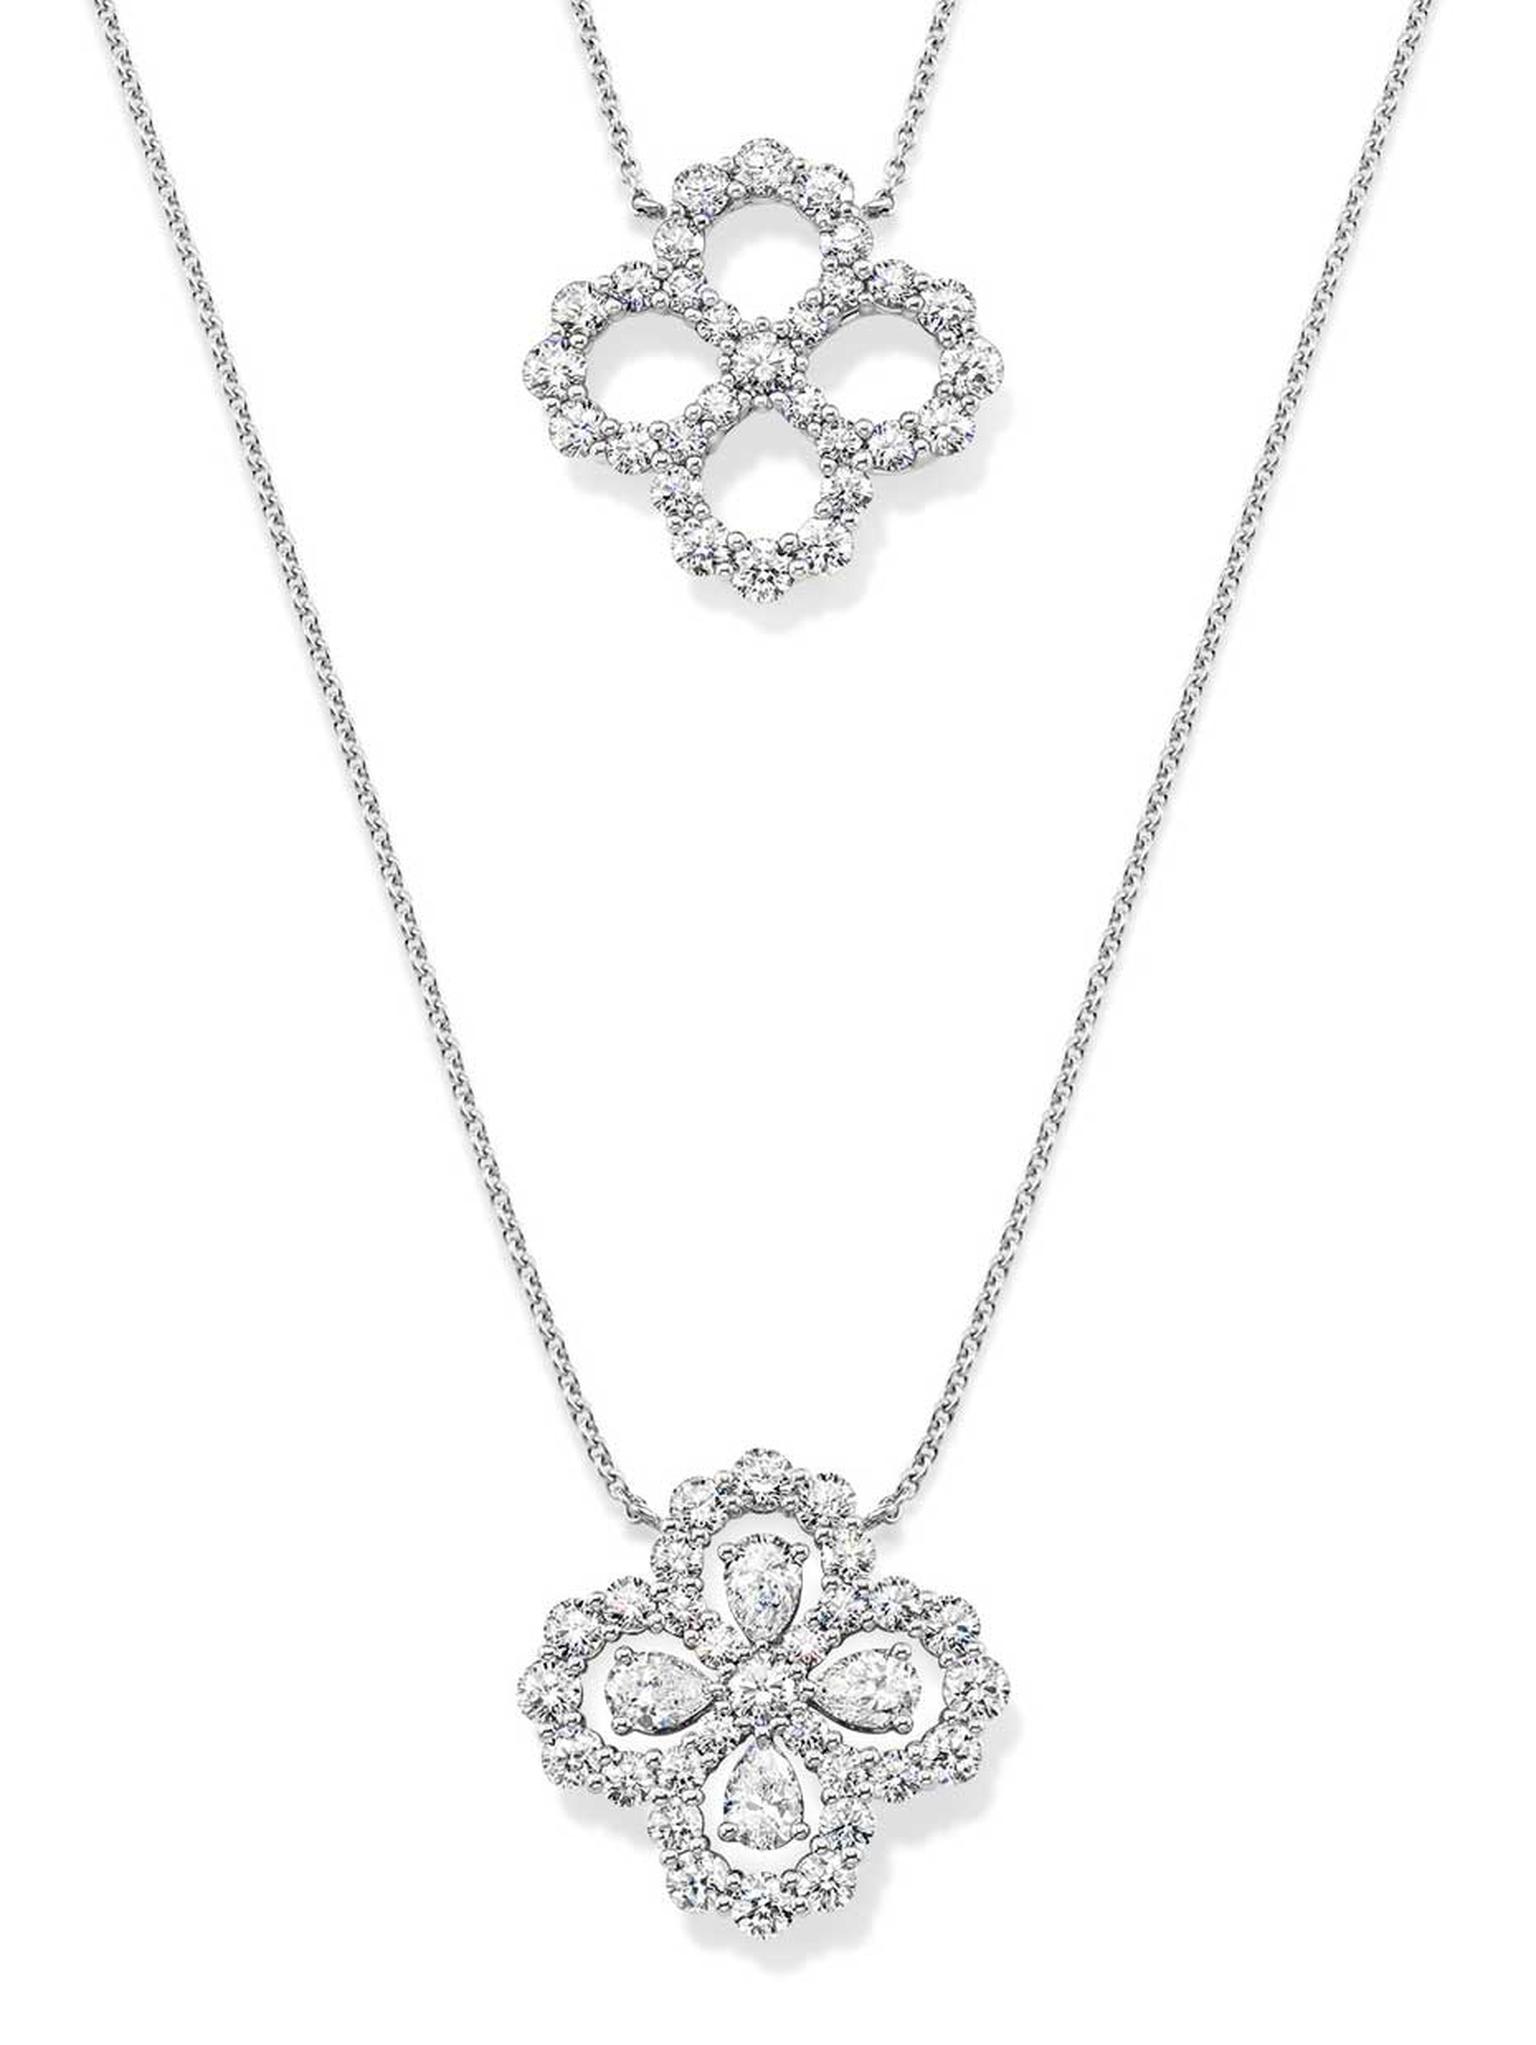 Harry Winston platinum Diamond Loop collection necklaces.